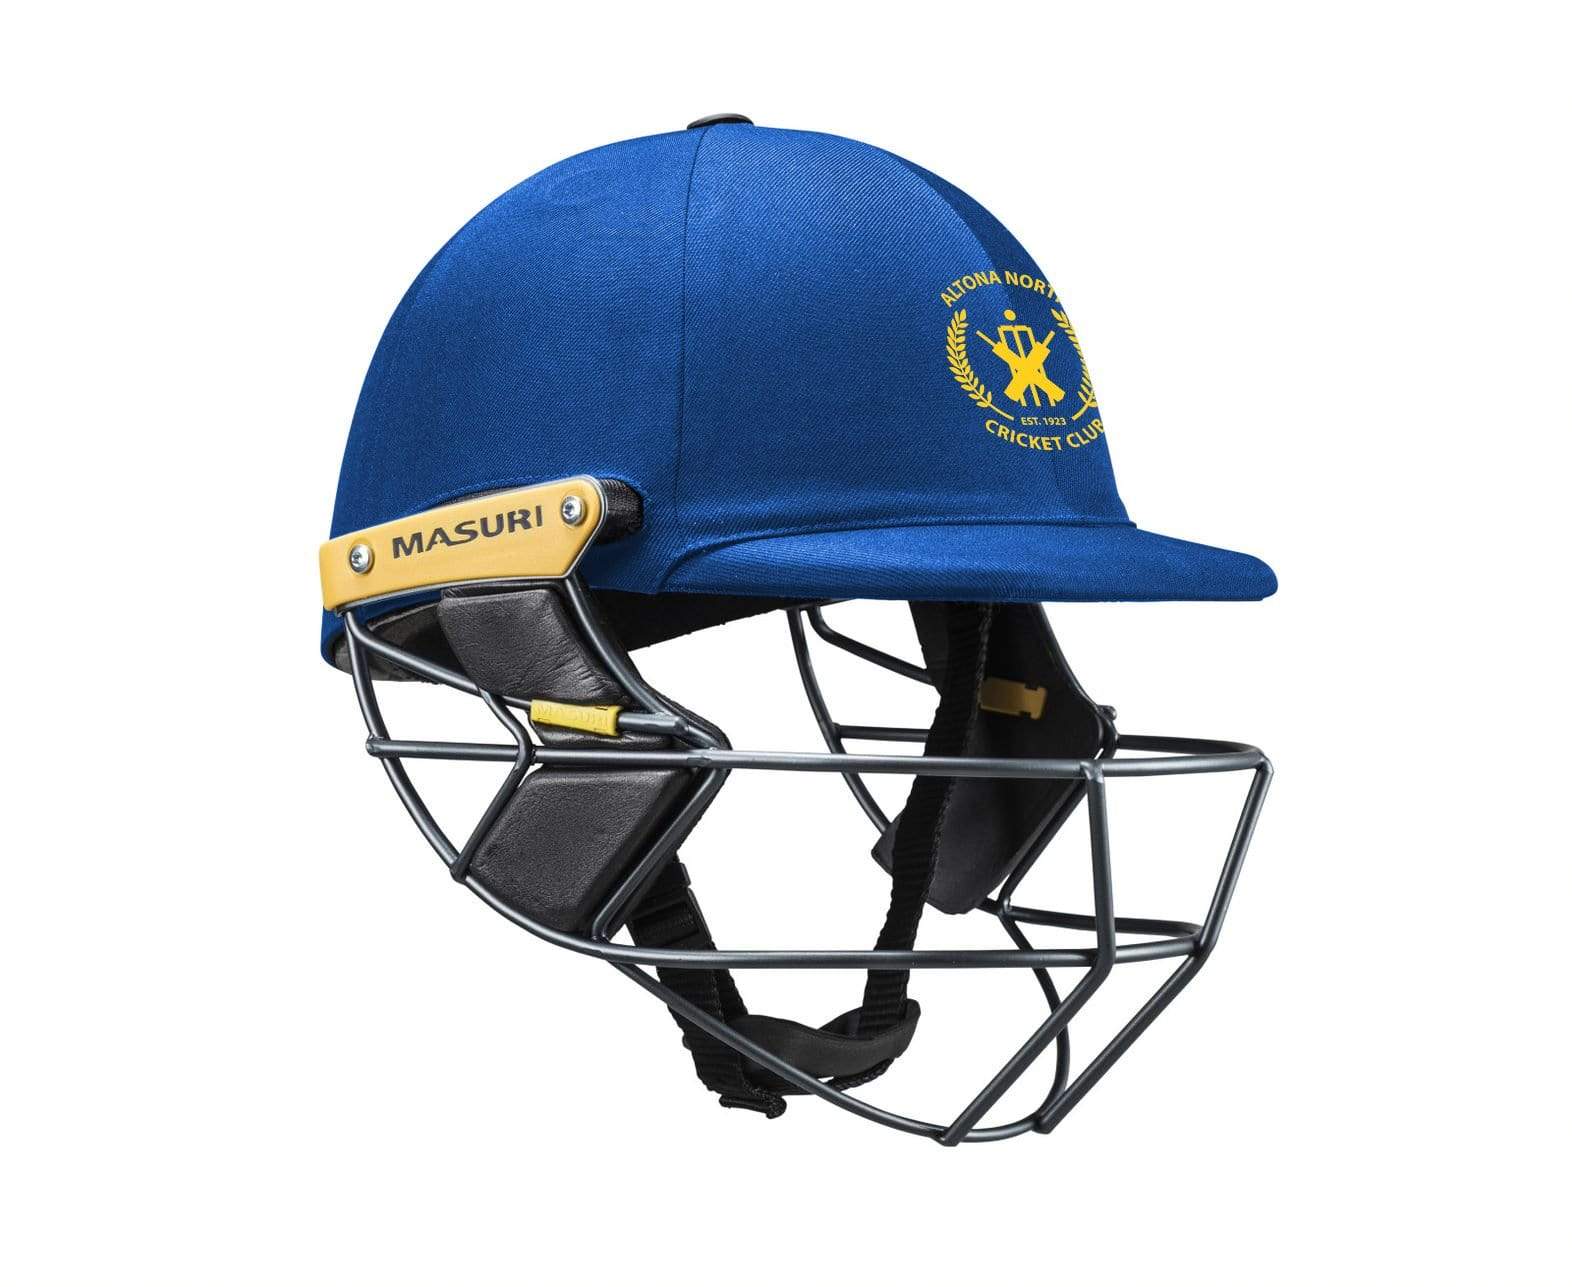 Masuri Club Helmet Altona North Cricket Club Helmet